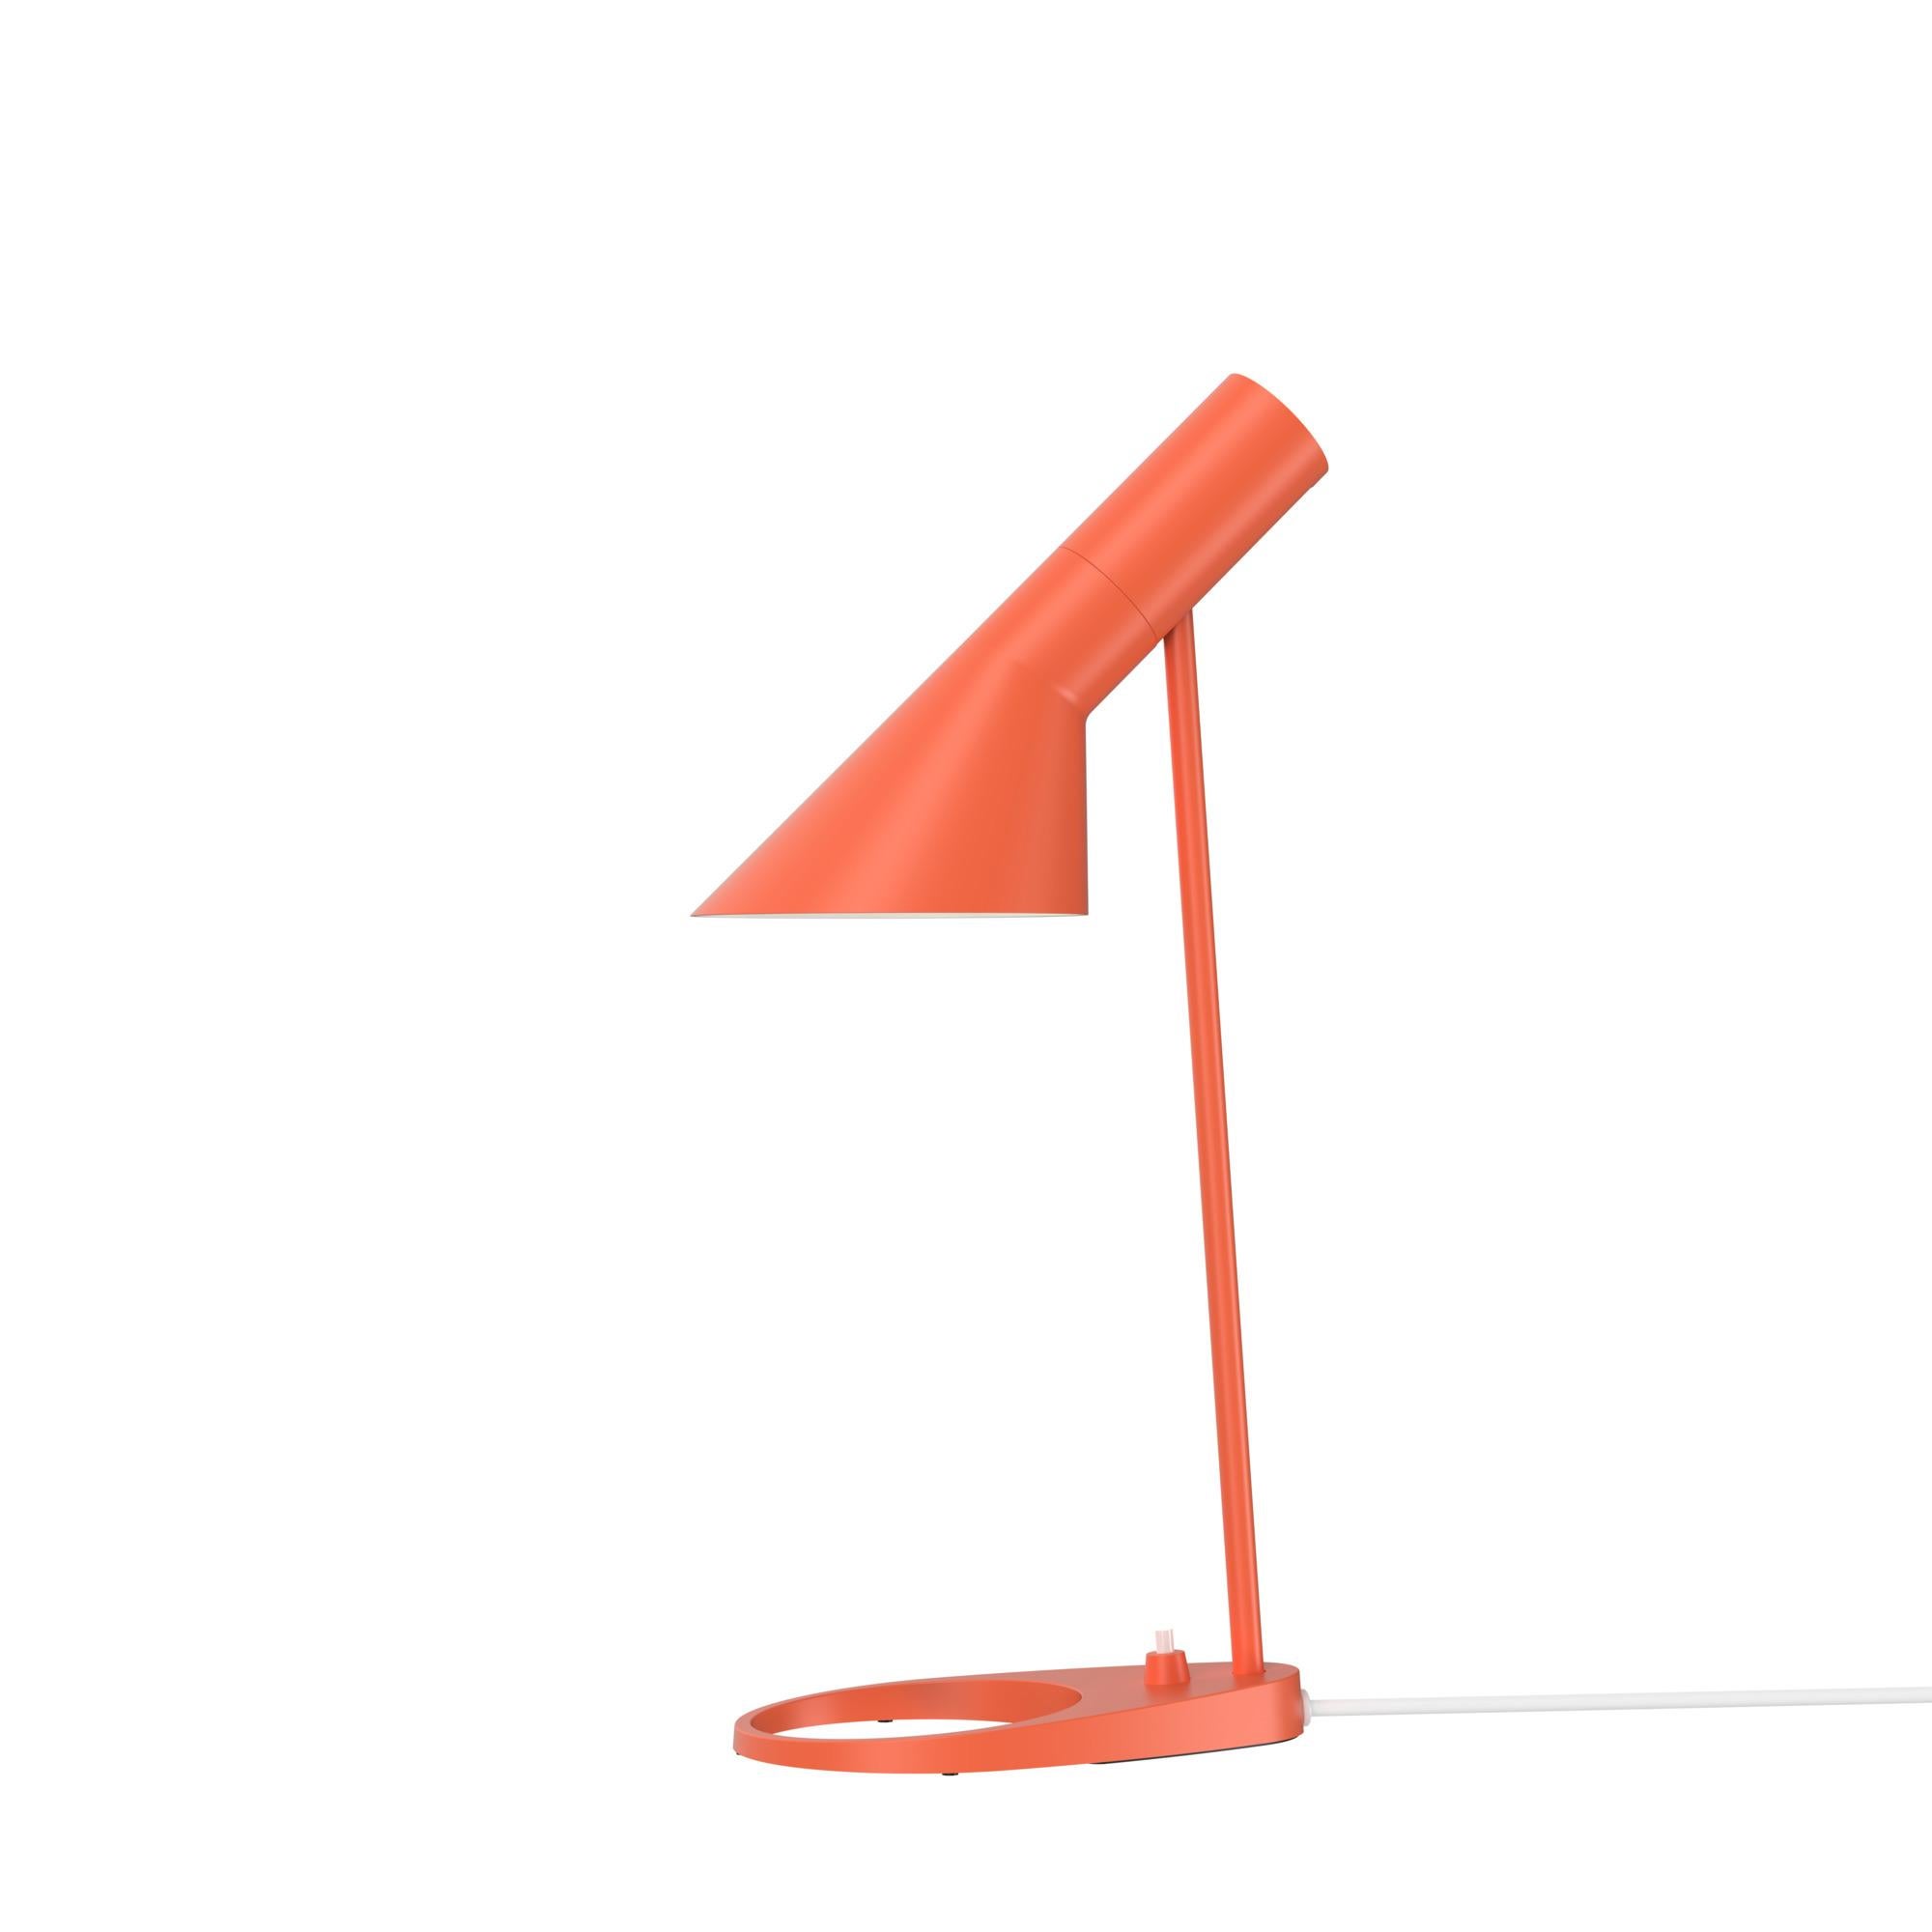 Arne Jacobsen 'AJ Mini' Table Lamp in Pale Petroleum for Louis Poulsen For Sale 4